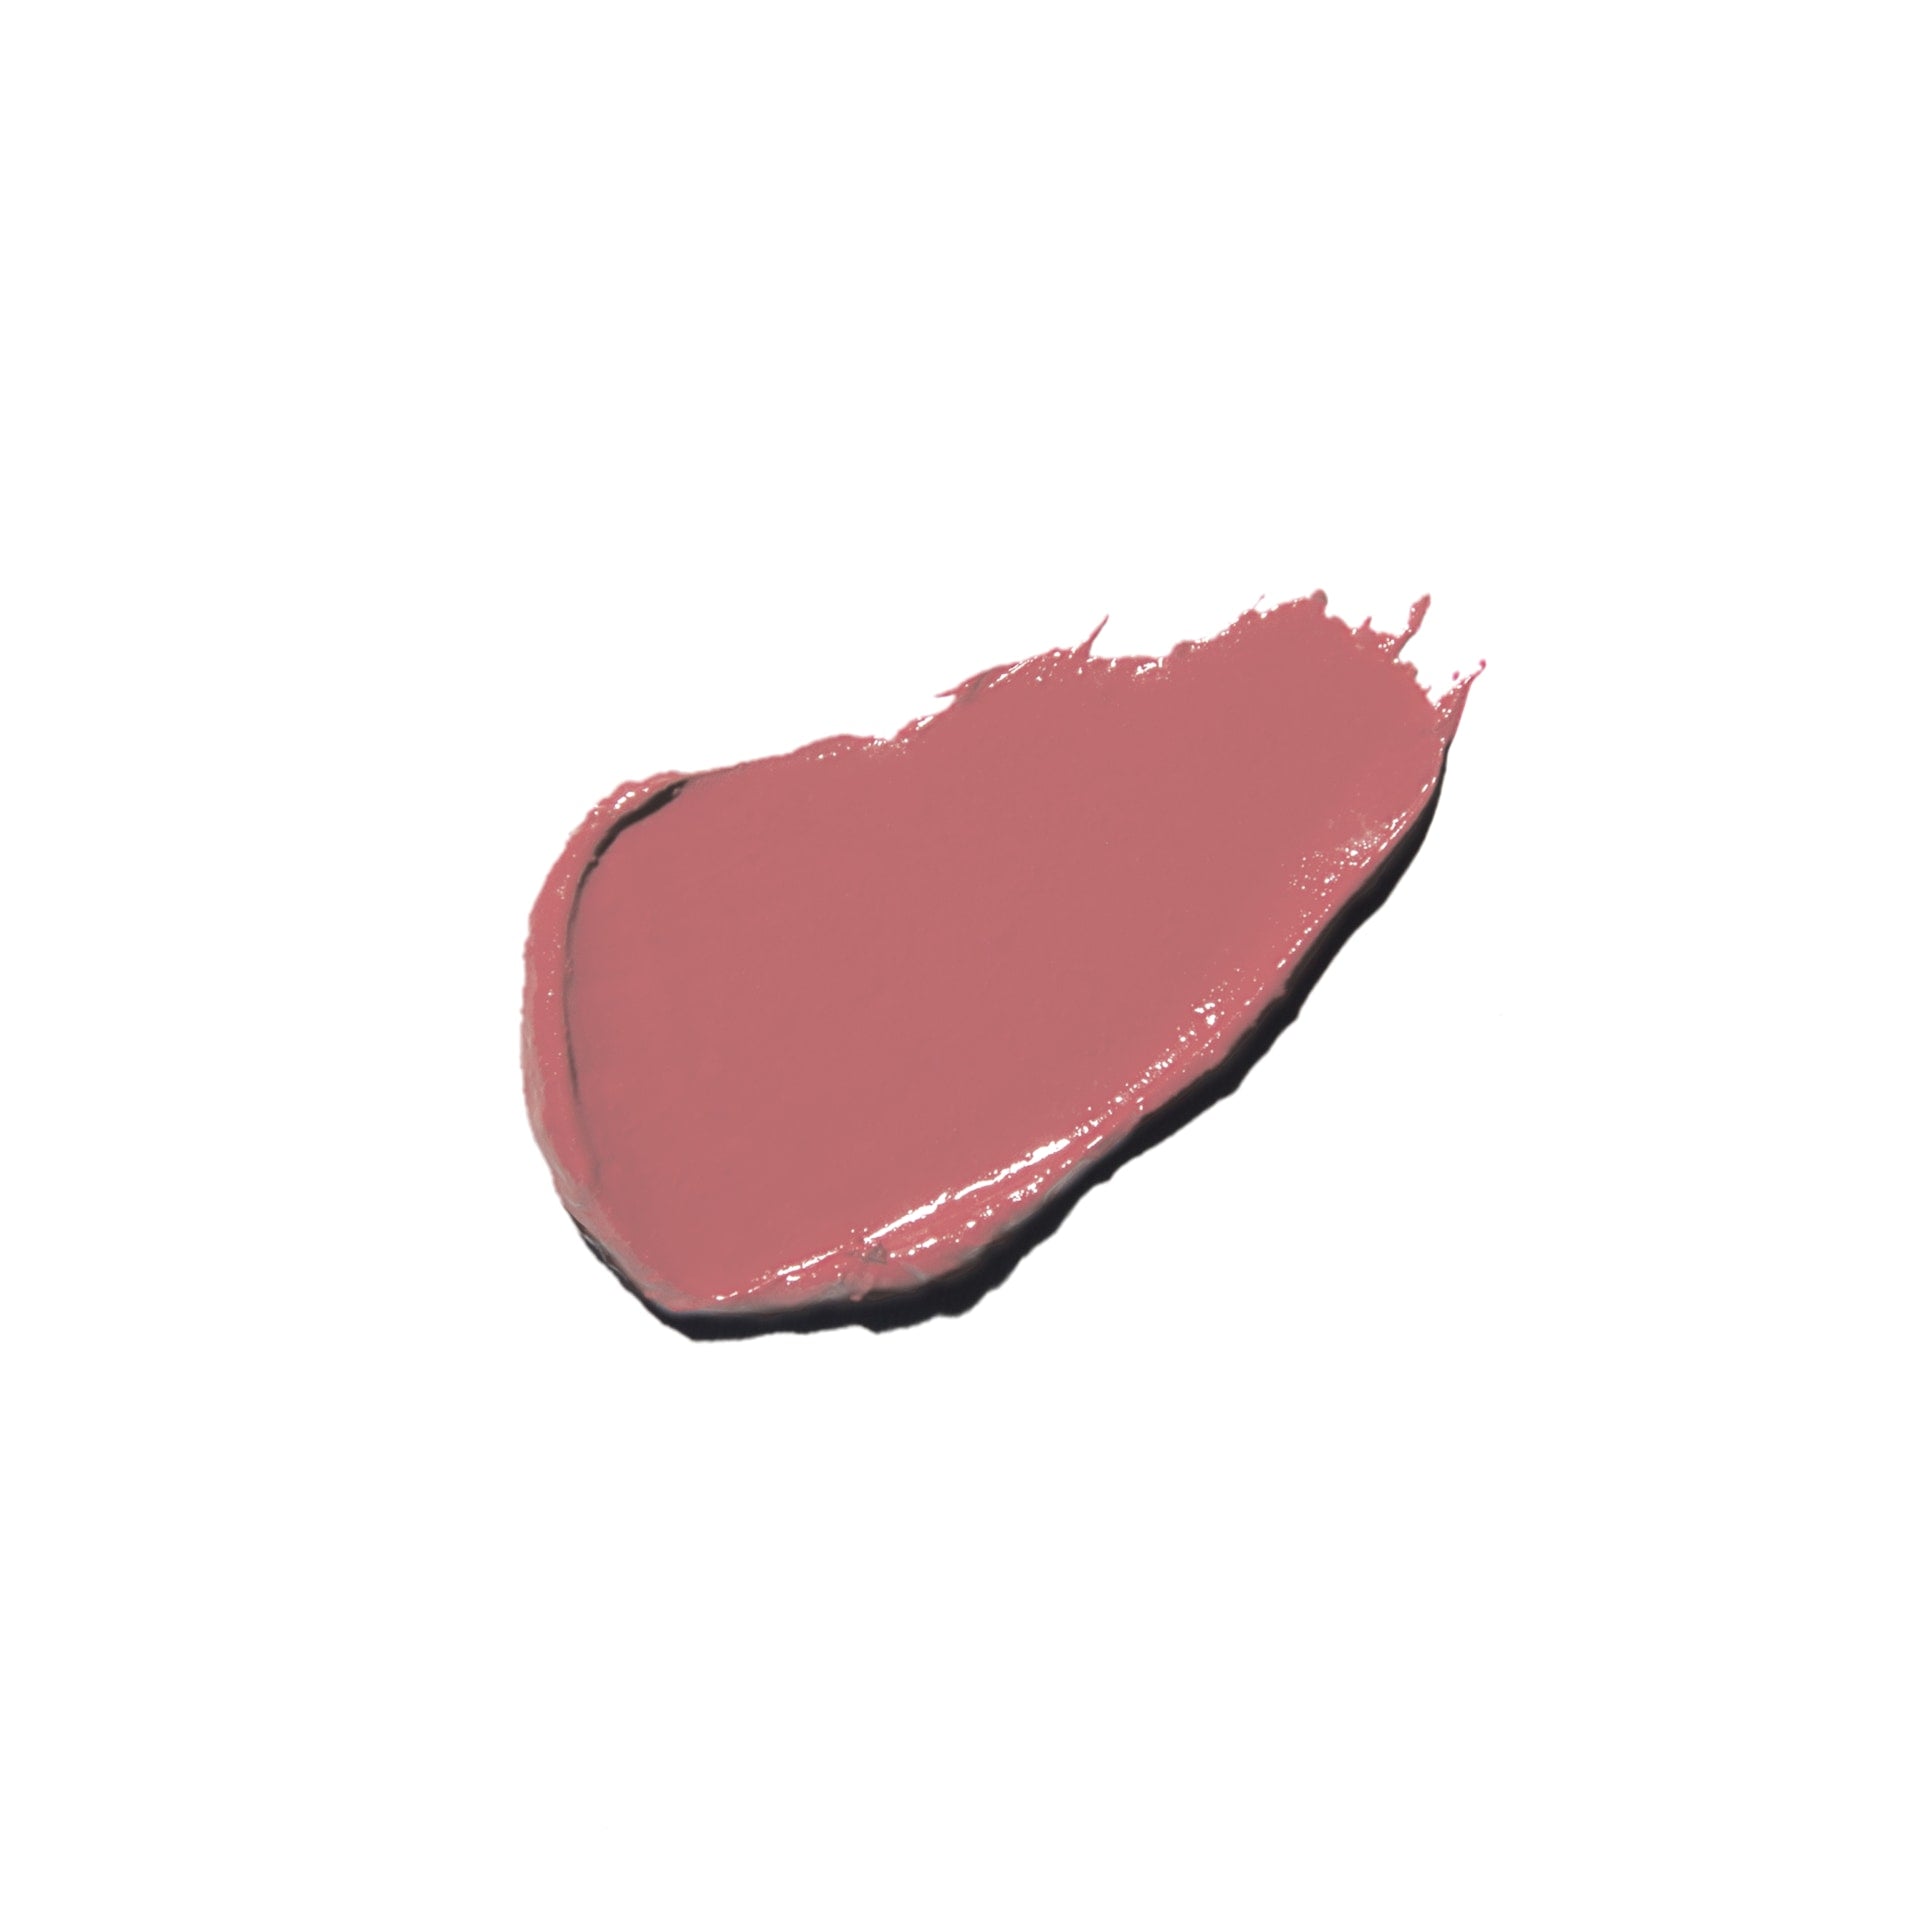 100% PURE Fruit Pigmented Lip Glaze seduce